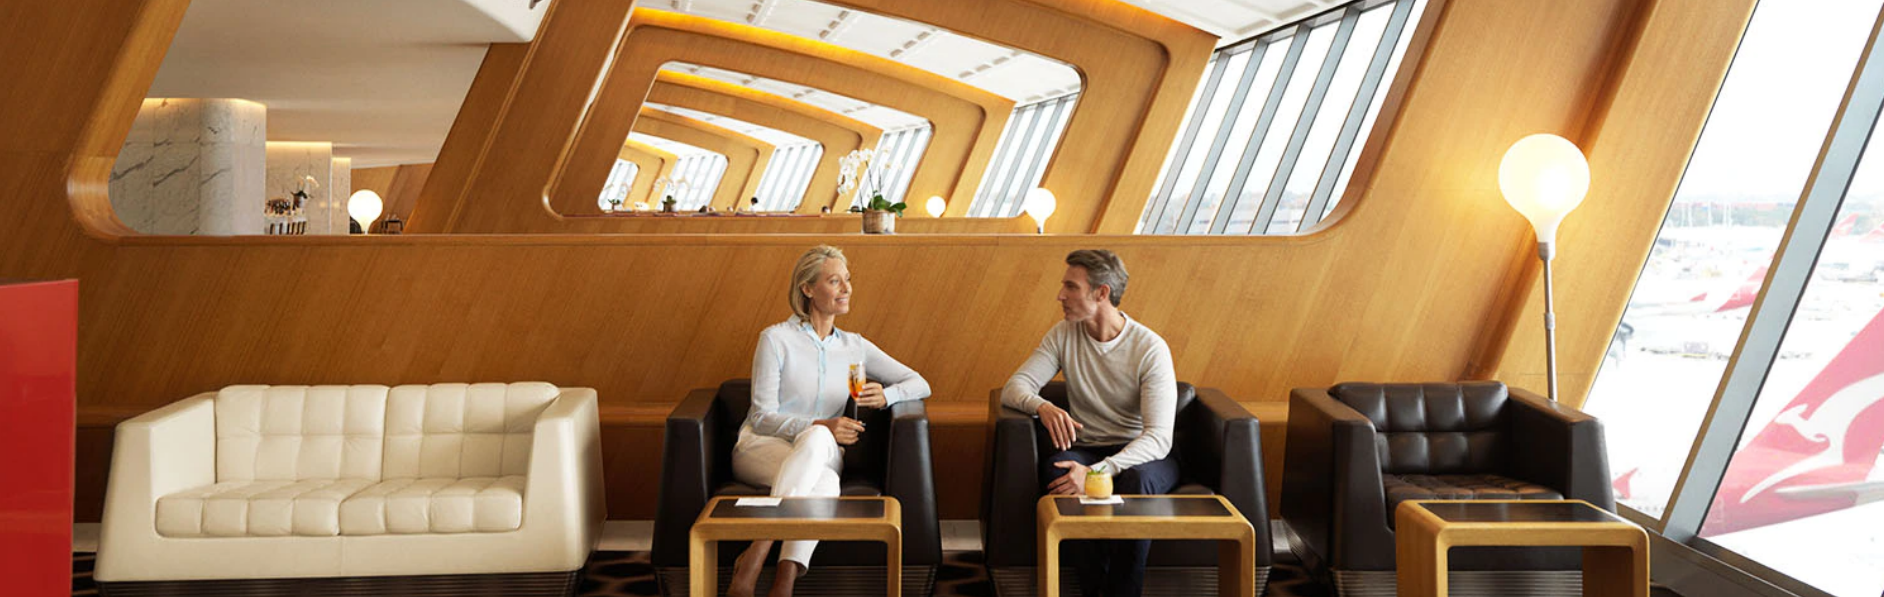 worlds best airport lounges - qantas first international lounge